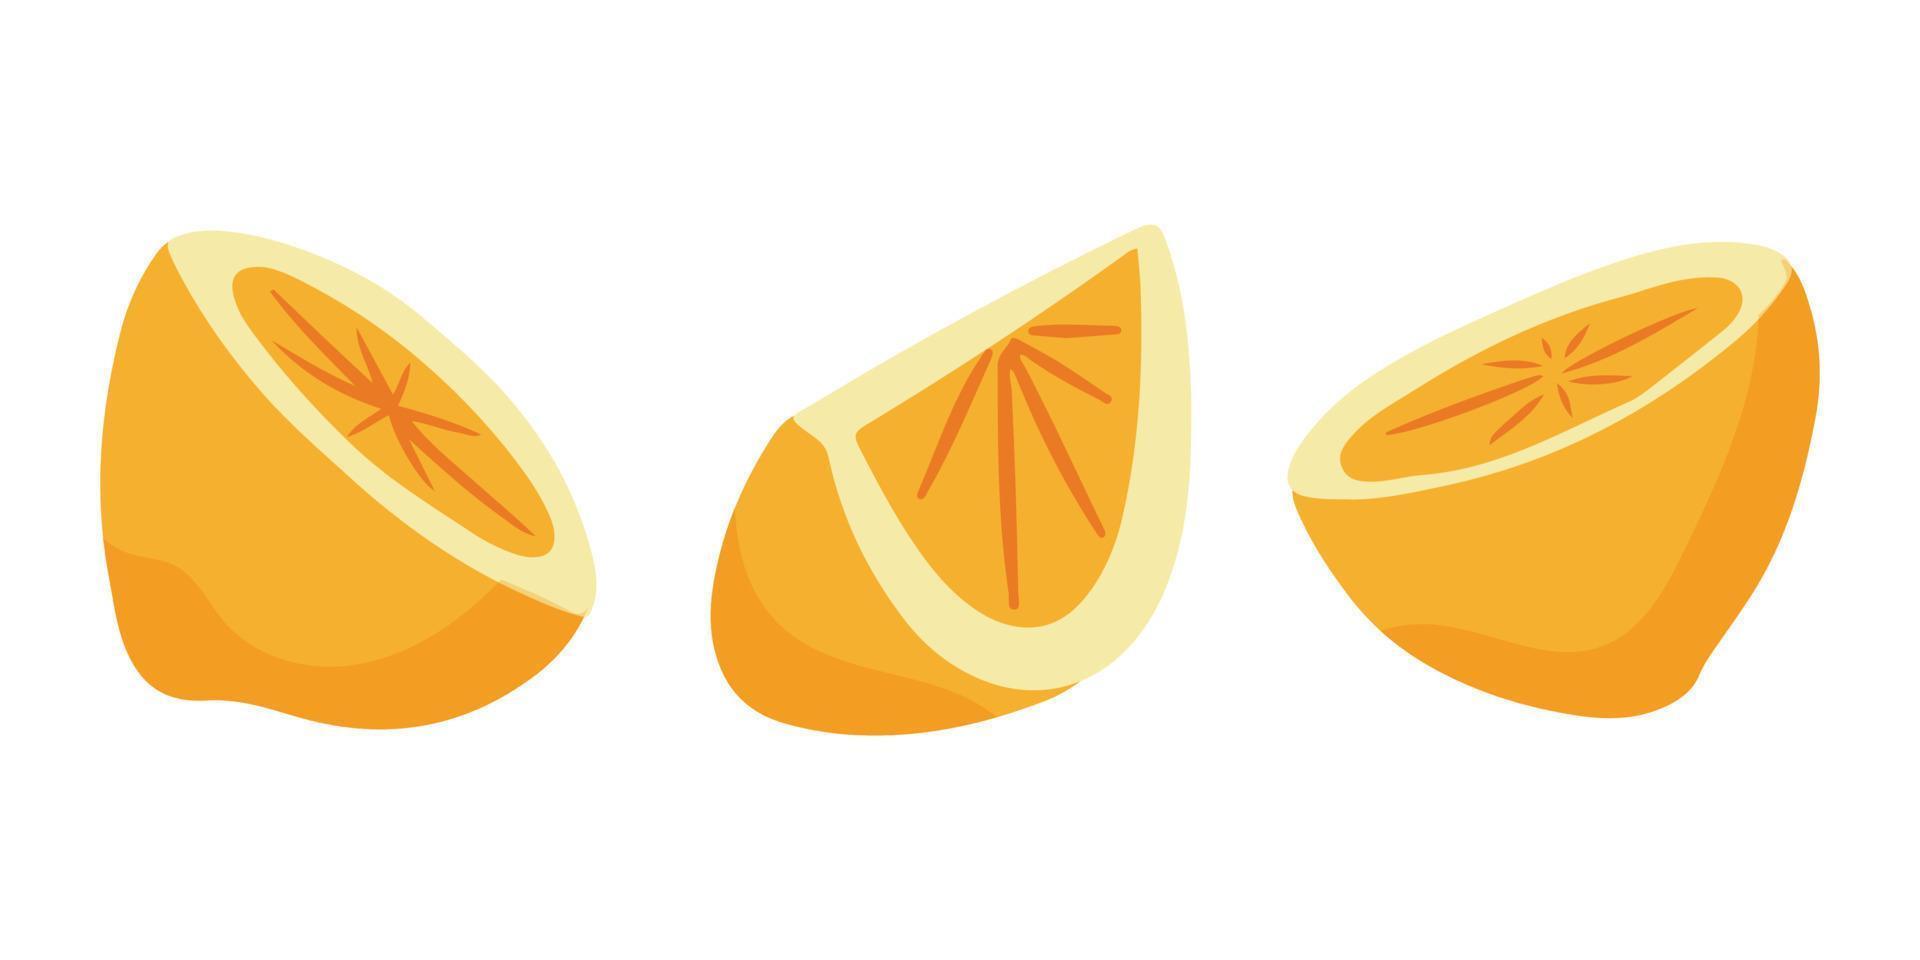 Lemon pieces. Cartoon vector illustration